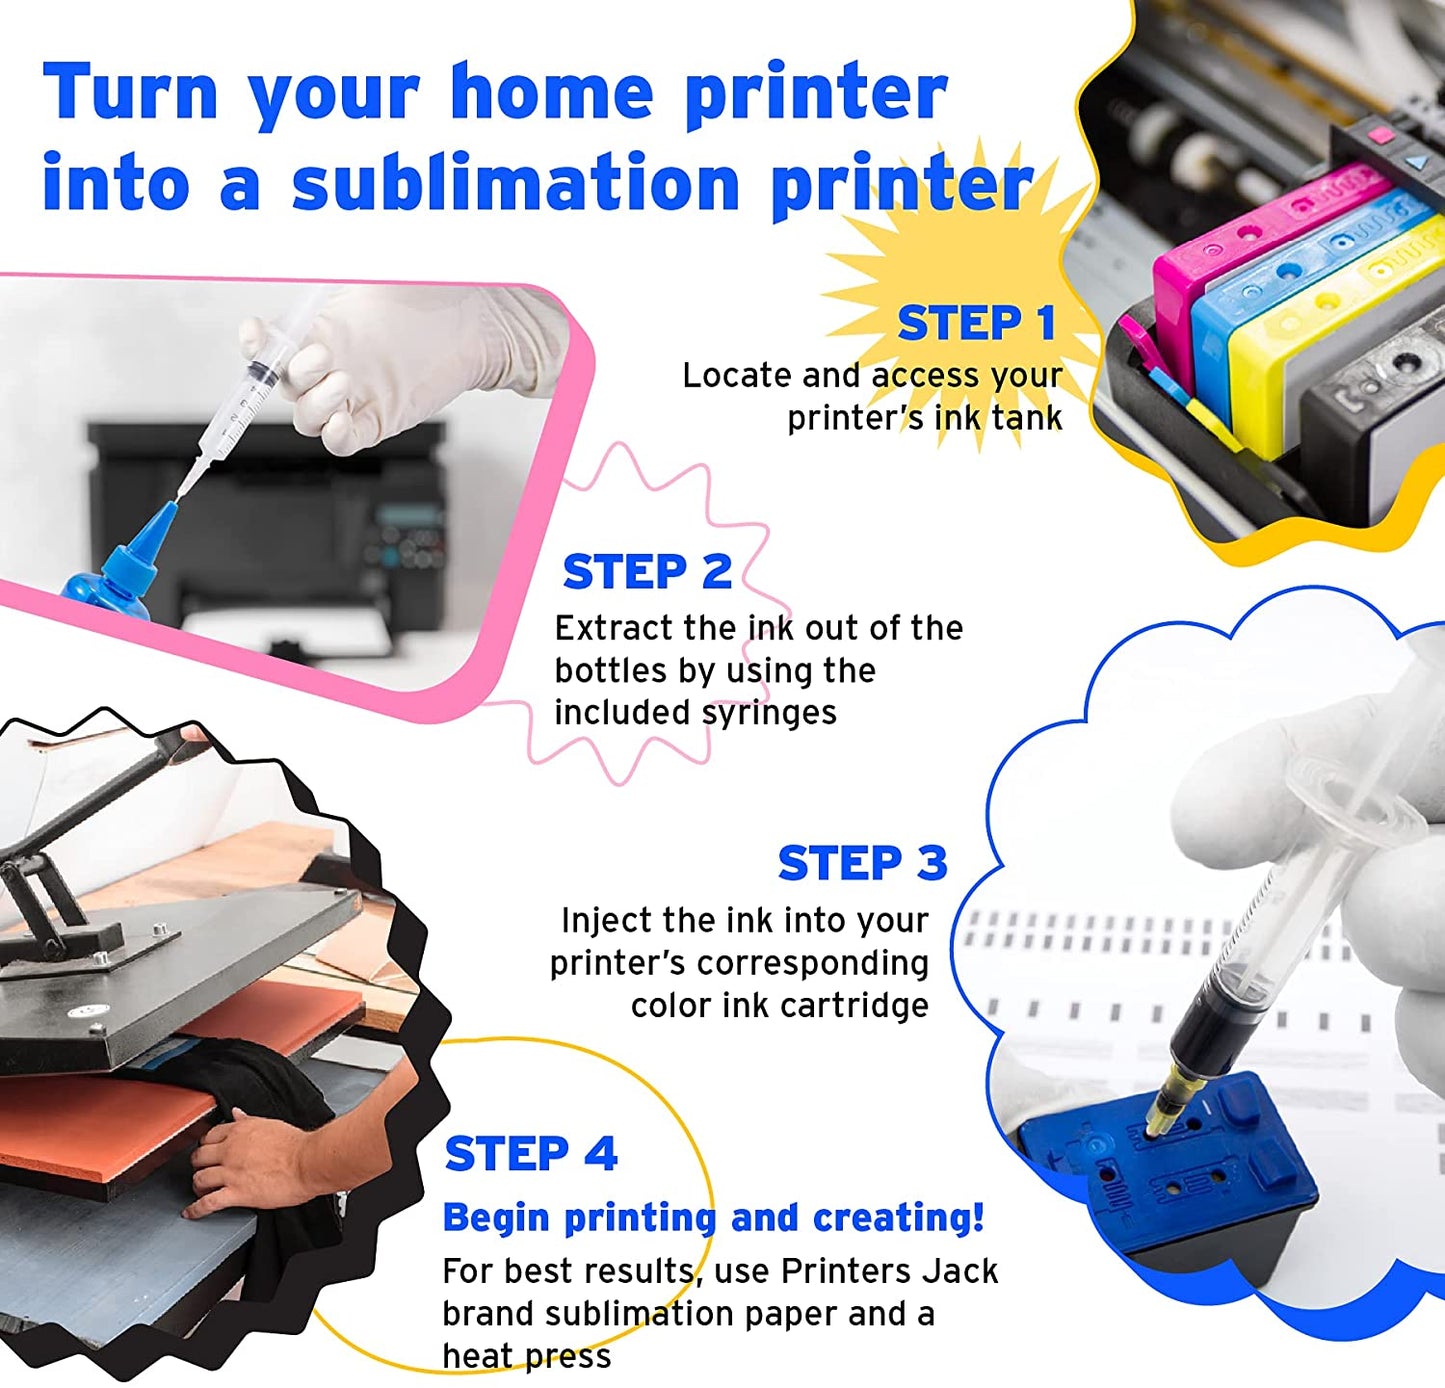 MultiColor Anti-UV Printers Jack Sublimation Ink Refill for Epson EcoTank Supertank Printers